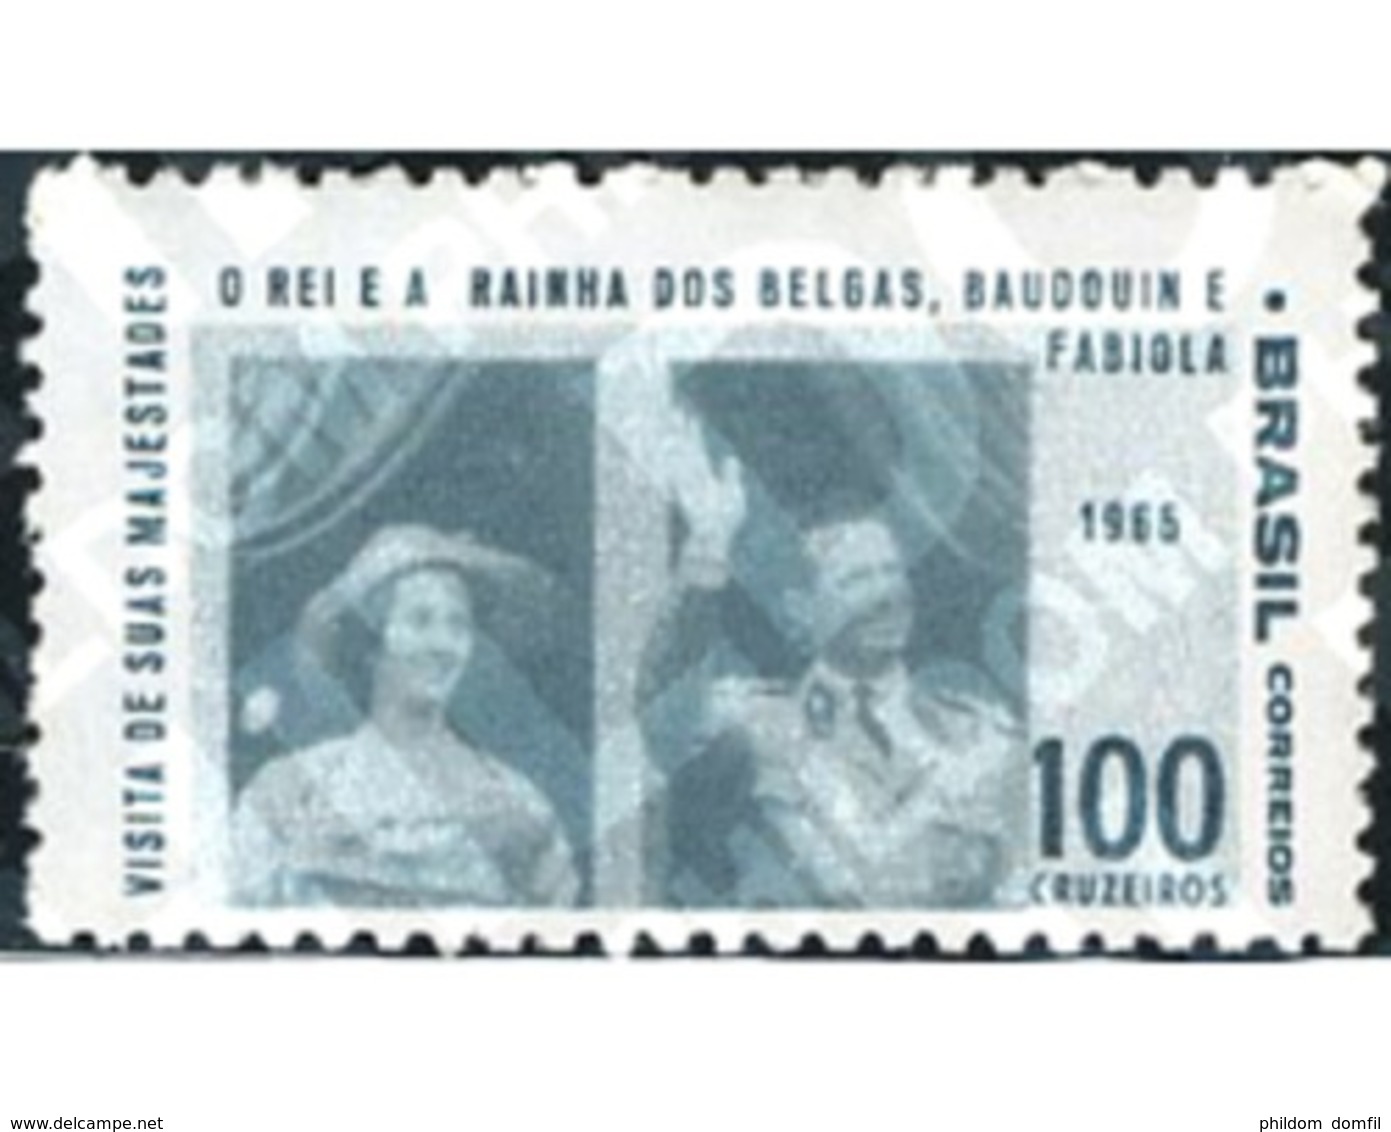 Ref. 170504 * MNH * - BRAZIL. 1965. VISITA DEL REI BALDUINO I DE LA REINA FABIOLA DE BELGICA - Unused Stamps